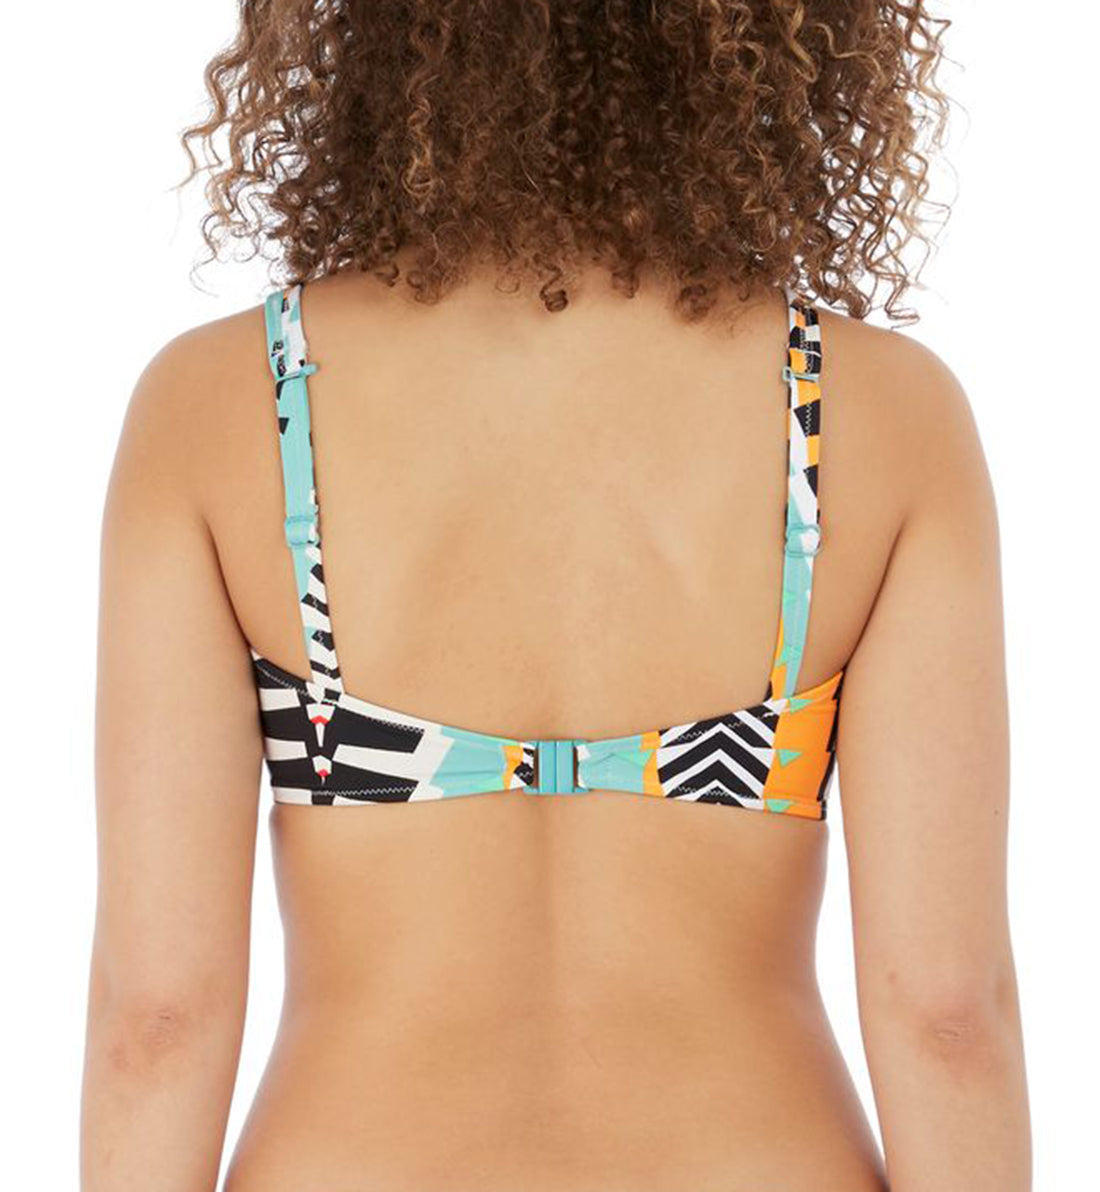 Freya Bassline Underwire Bikini Top with J Hook (7050),28E,Multi - Multi,28E